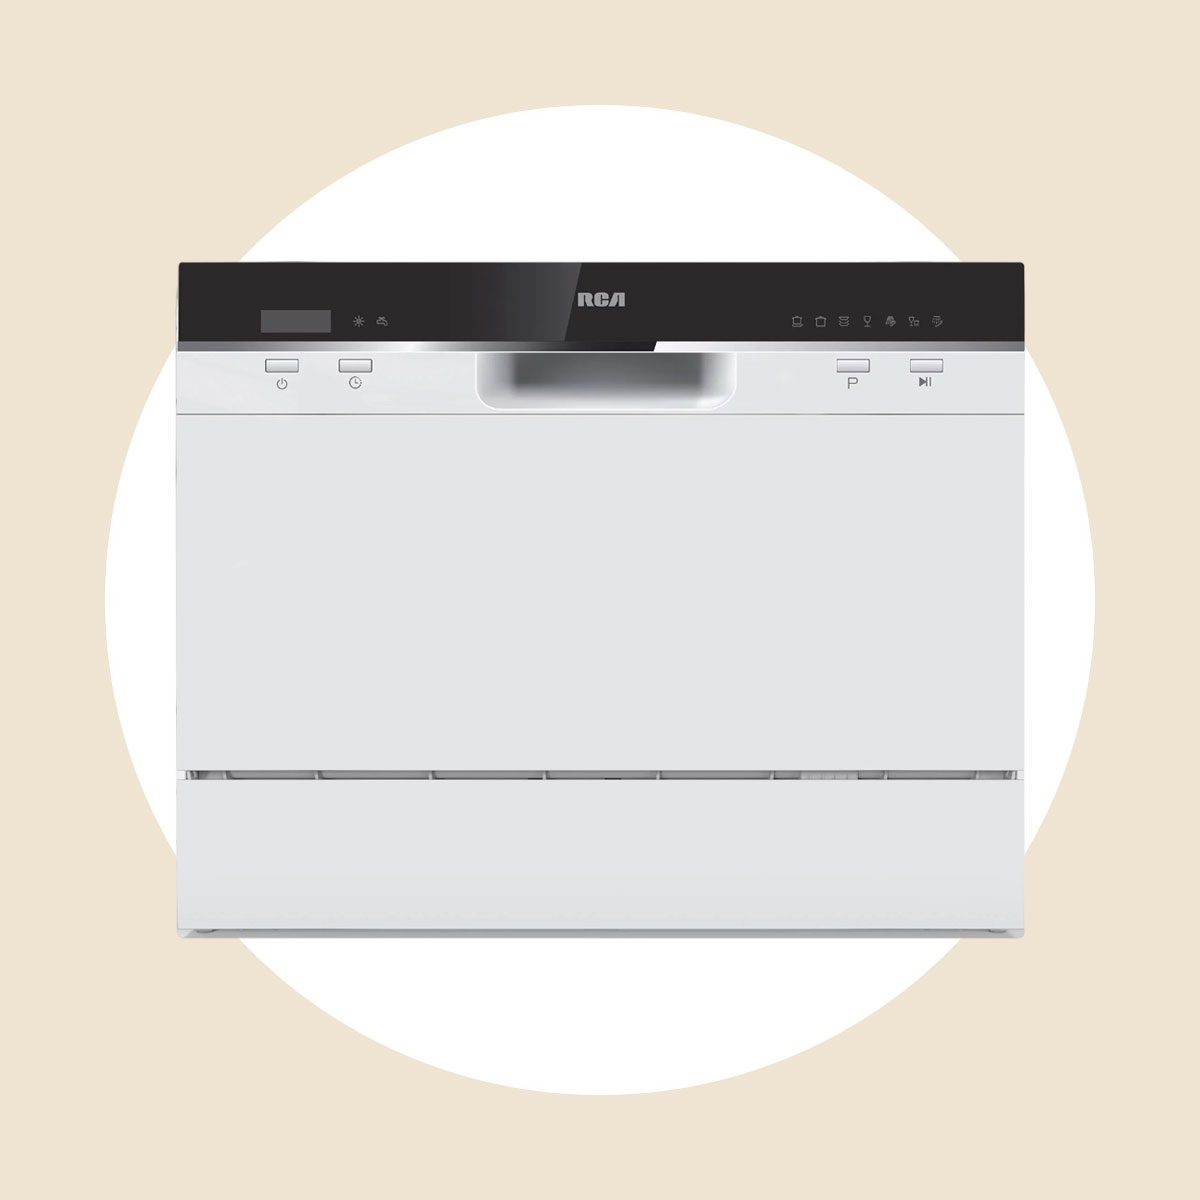 ecozy Countertop Dishwasher, No Hookup Needed, Portable Mini